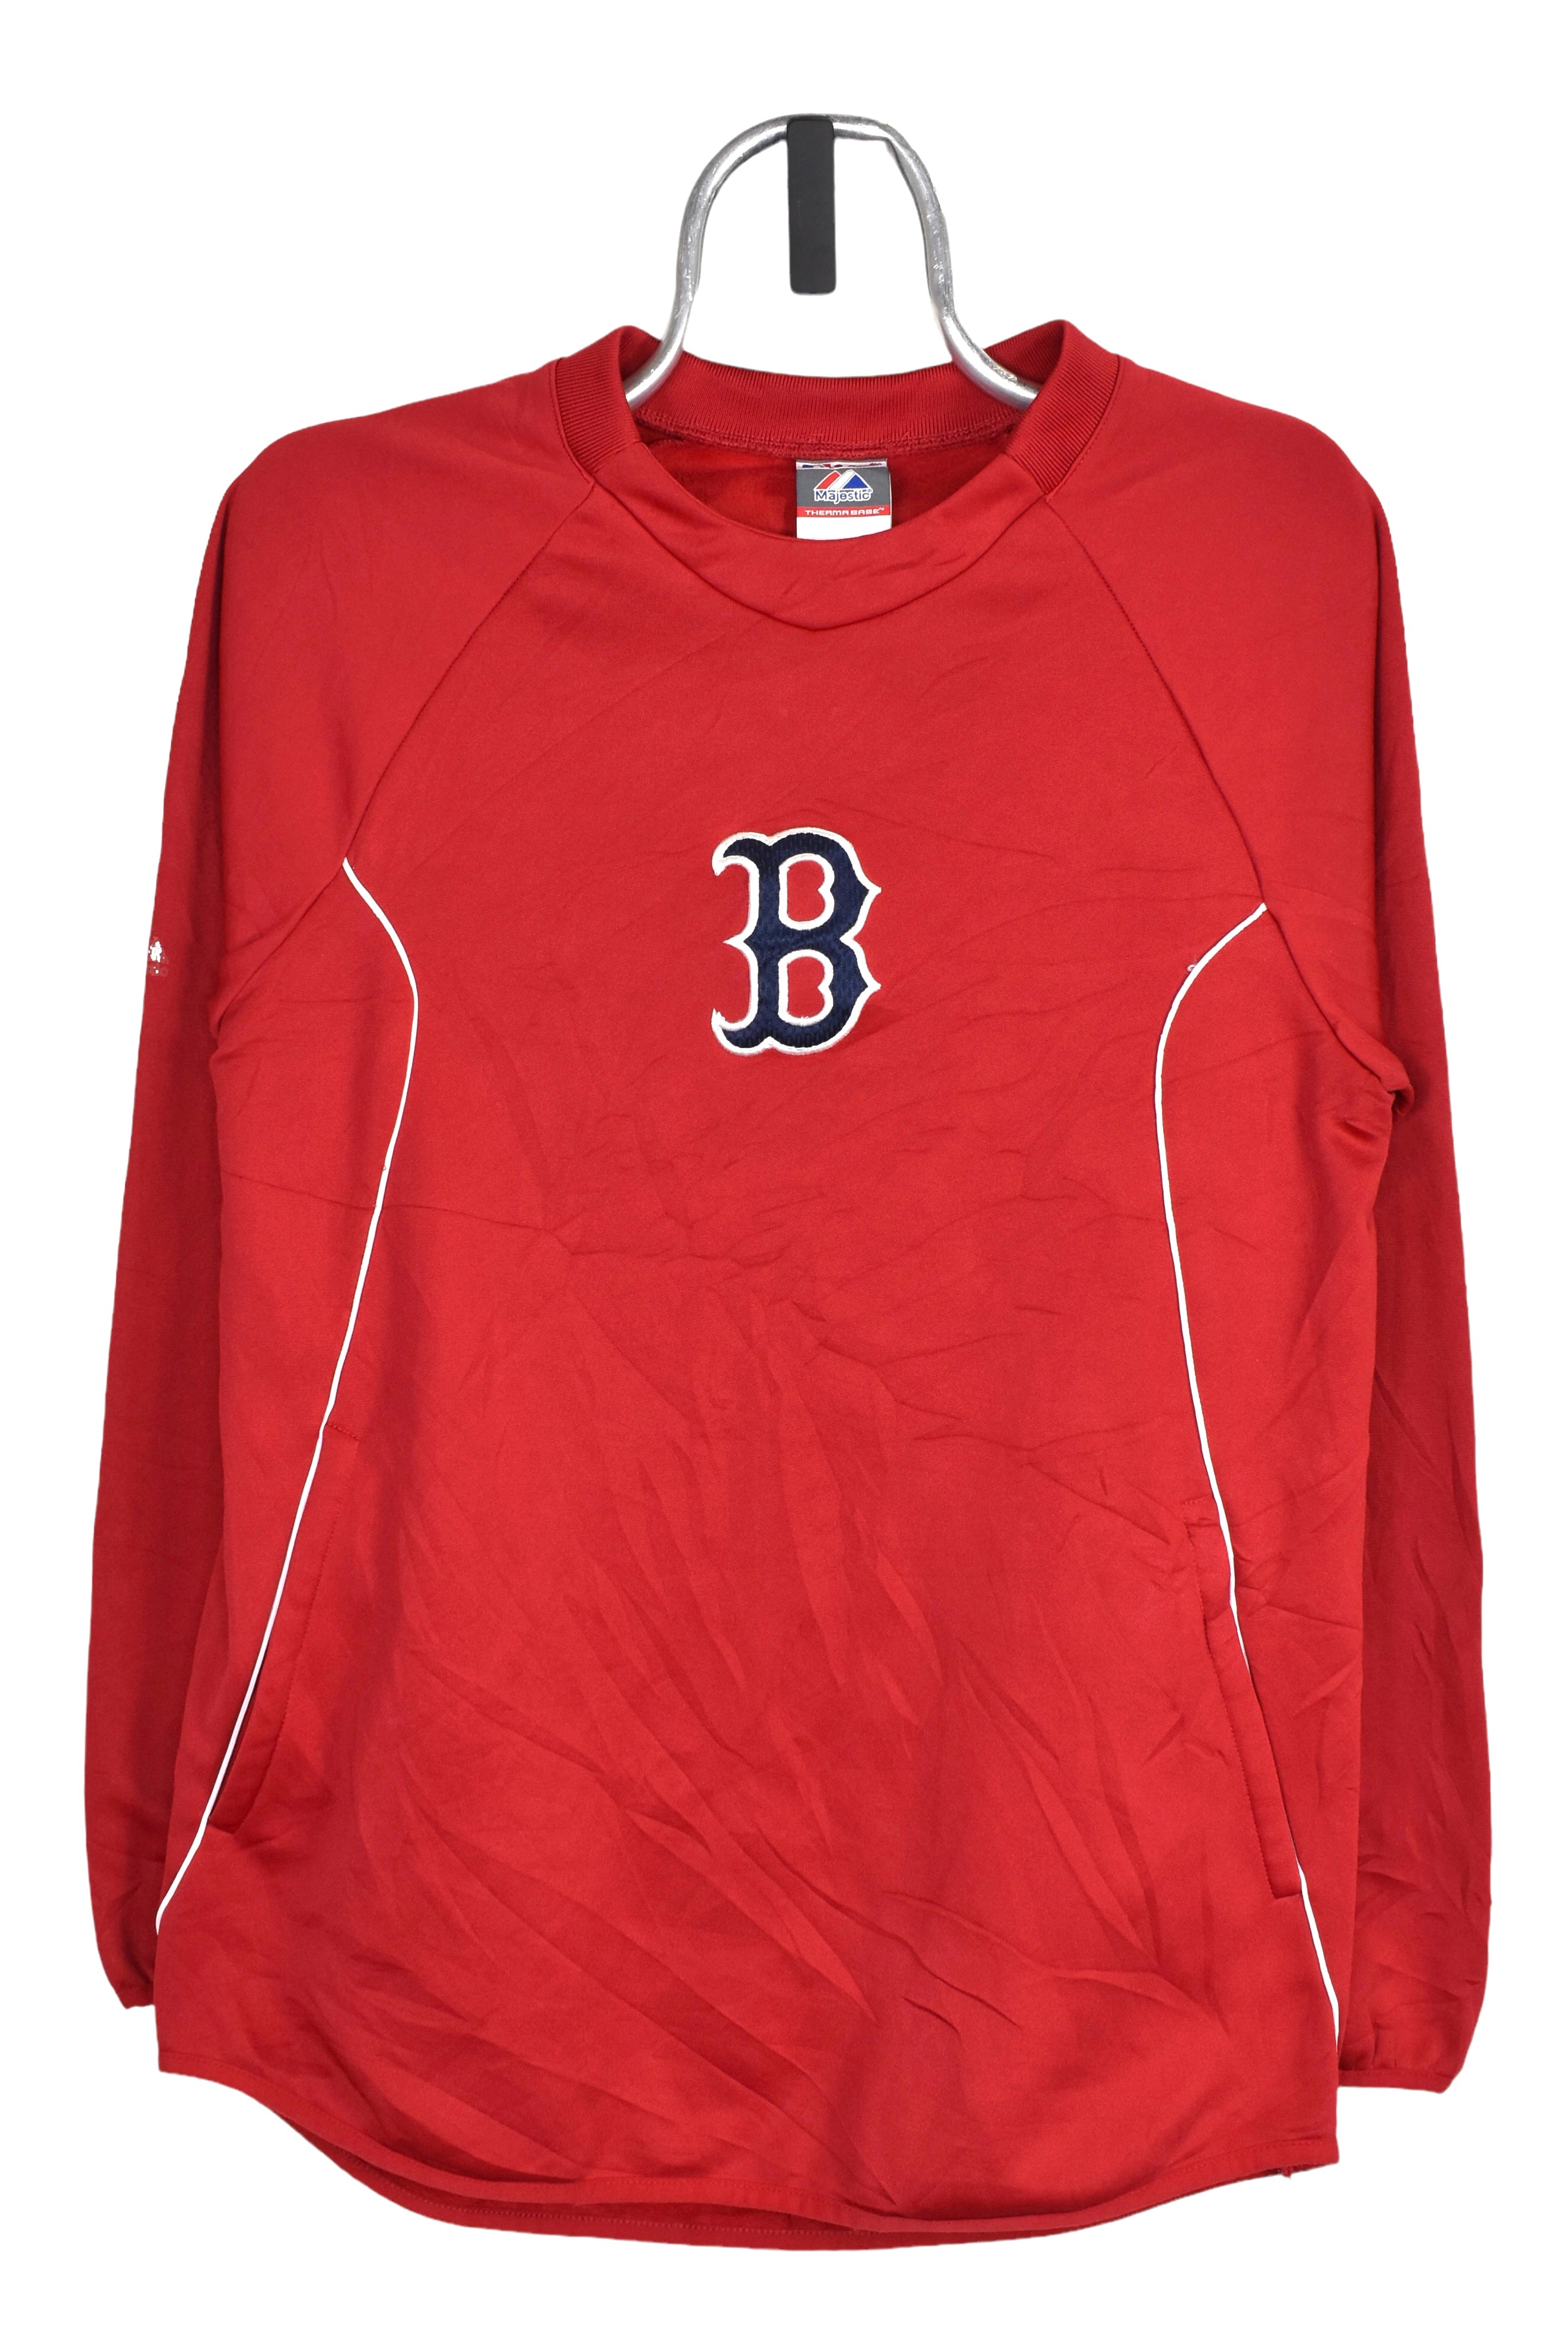 Vintage Boston Red Sox sweatshirt (M), red MLB embroidered crewneck